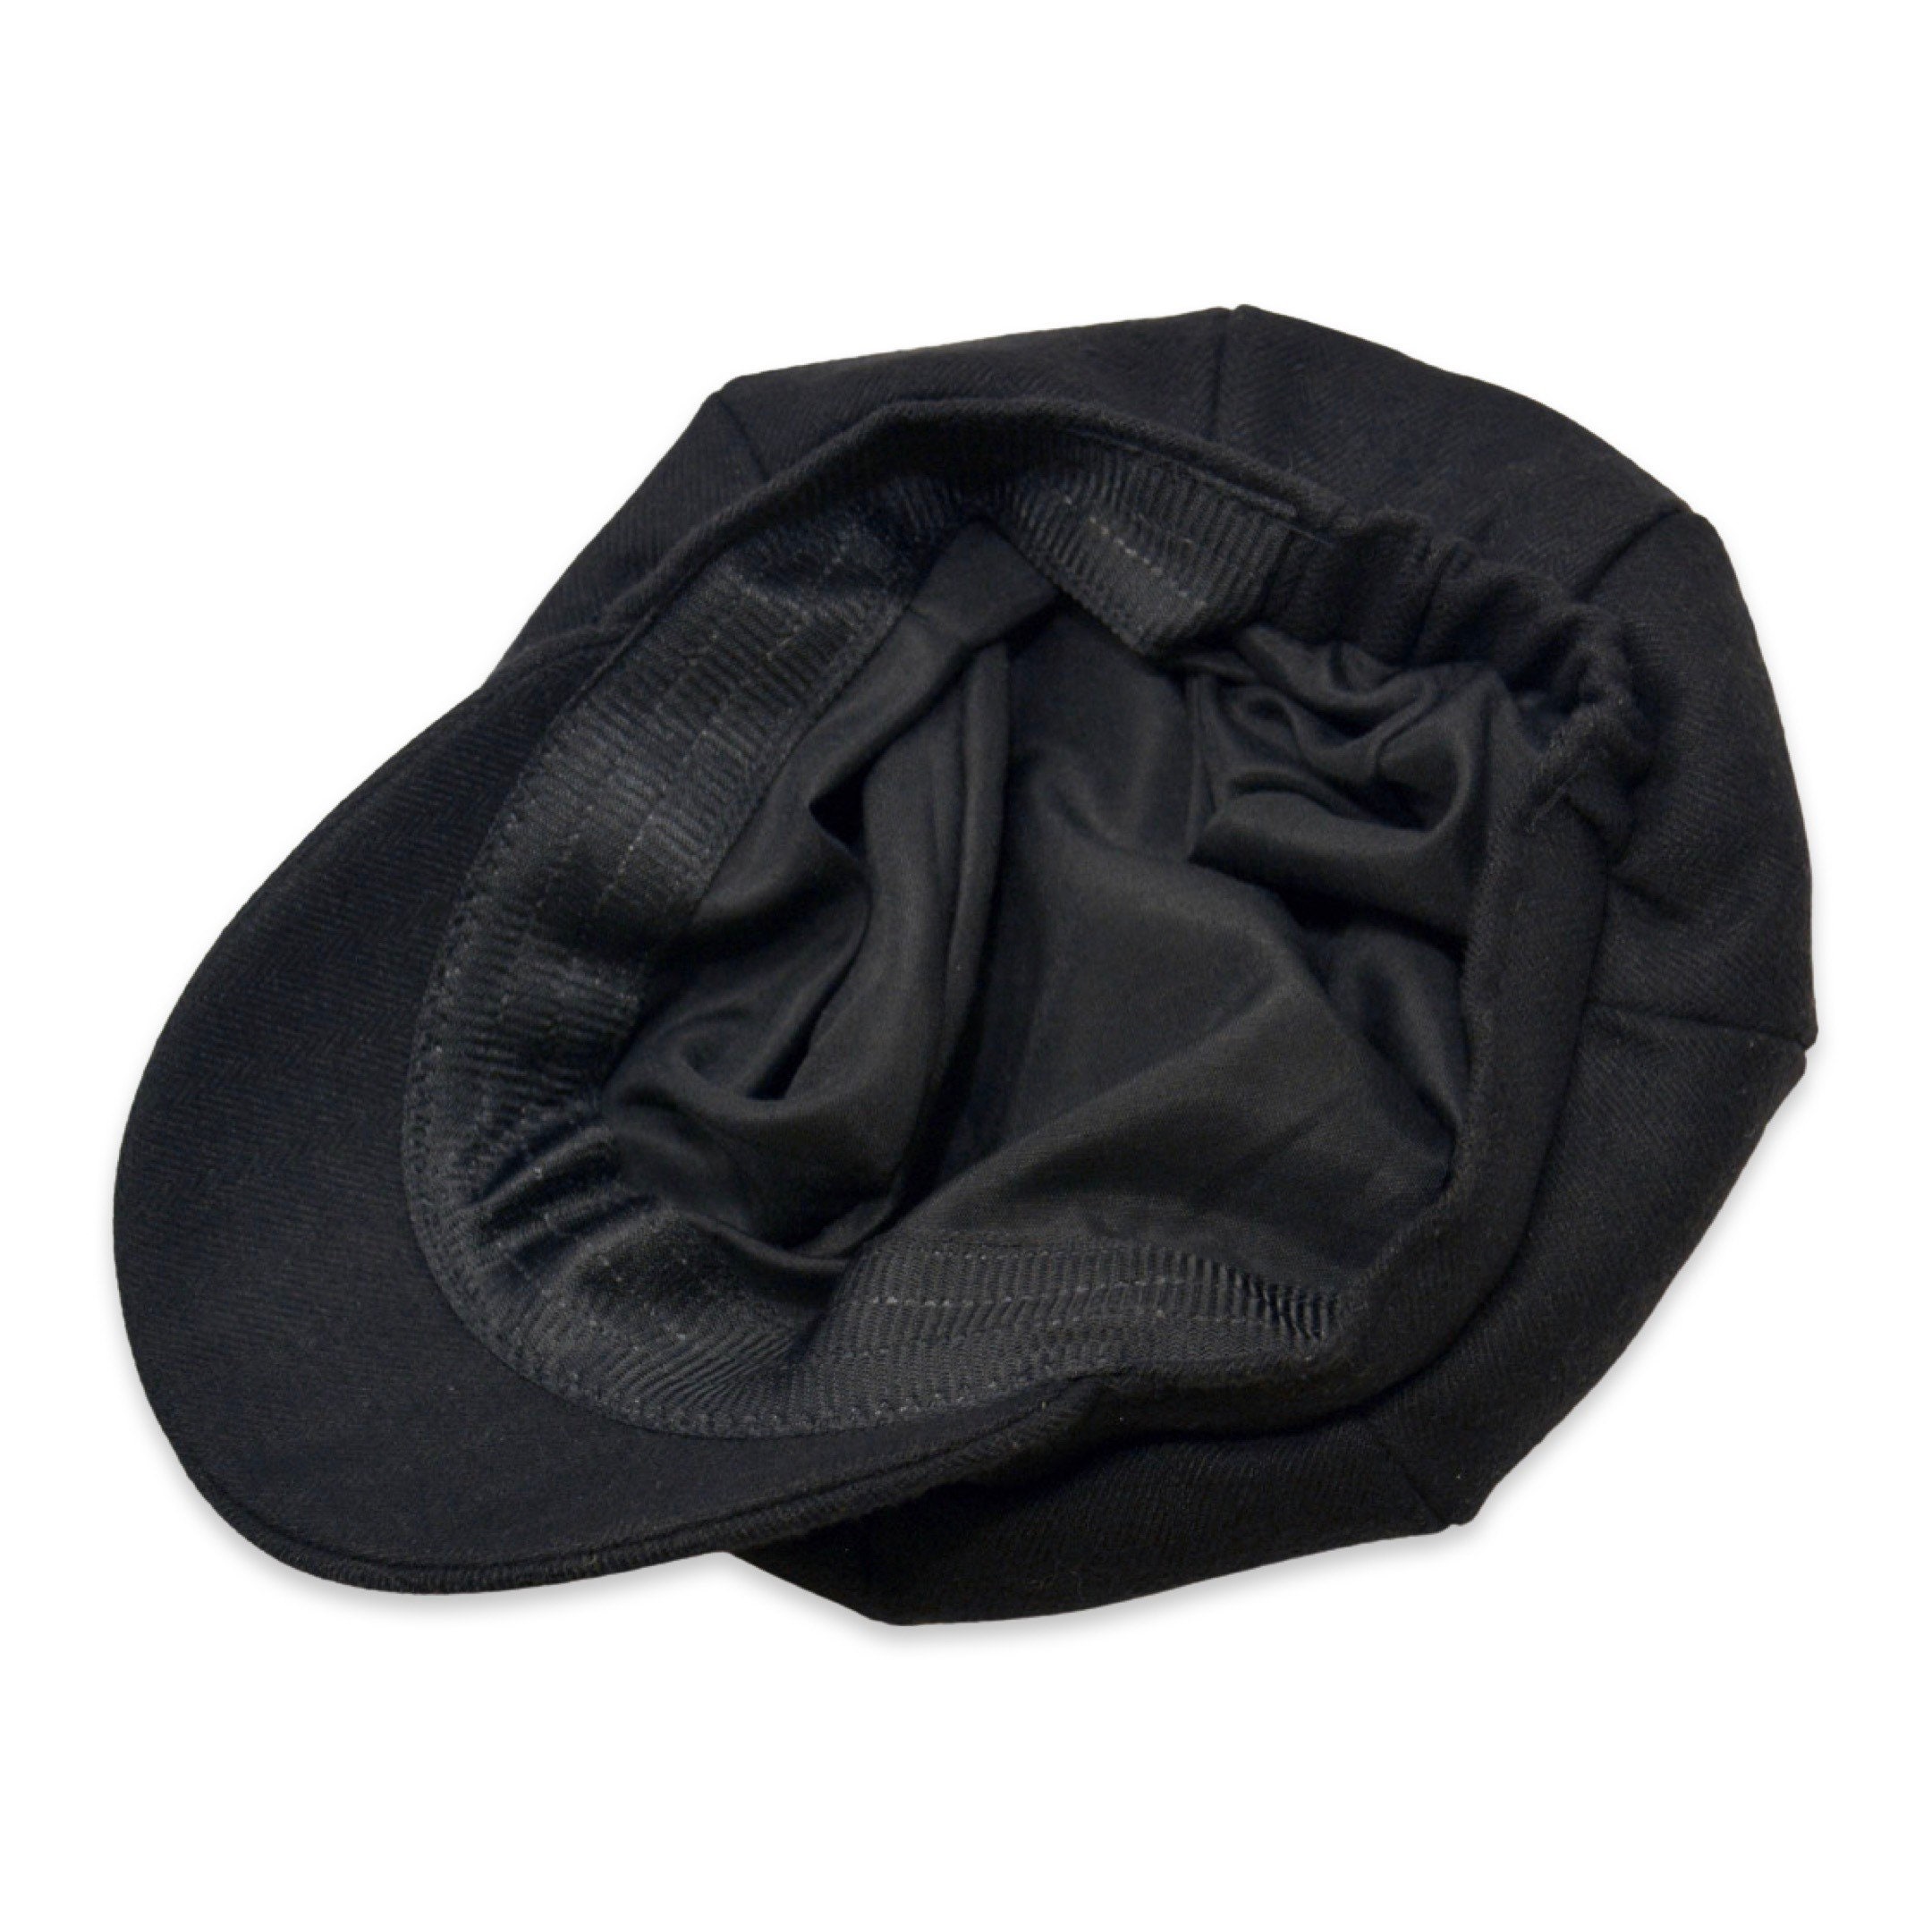 Bow Tie Suspenders Newsboy Black Cap Hat / Cabernet Dark Wine | Etsy